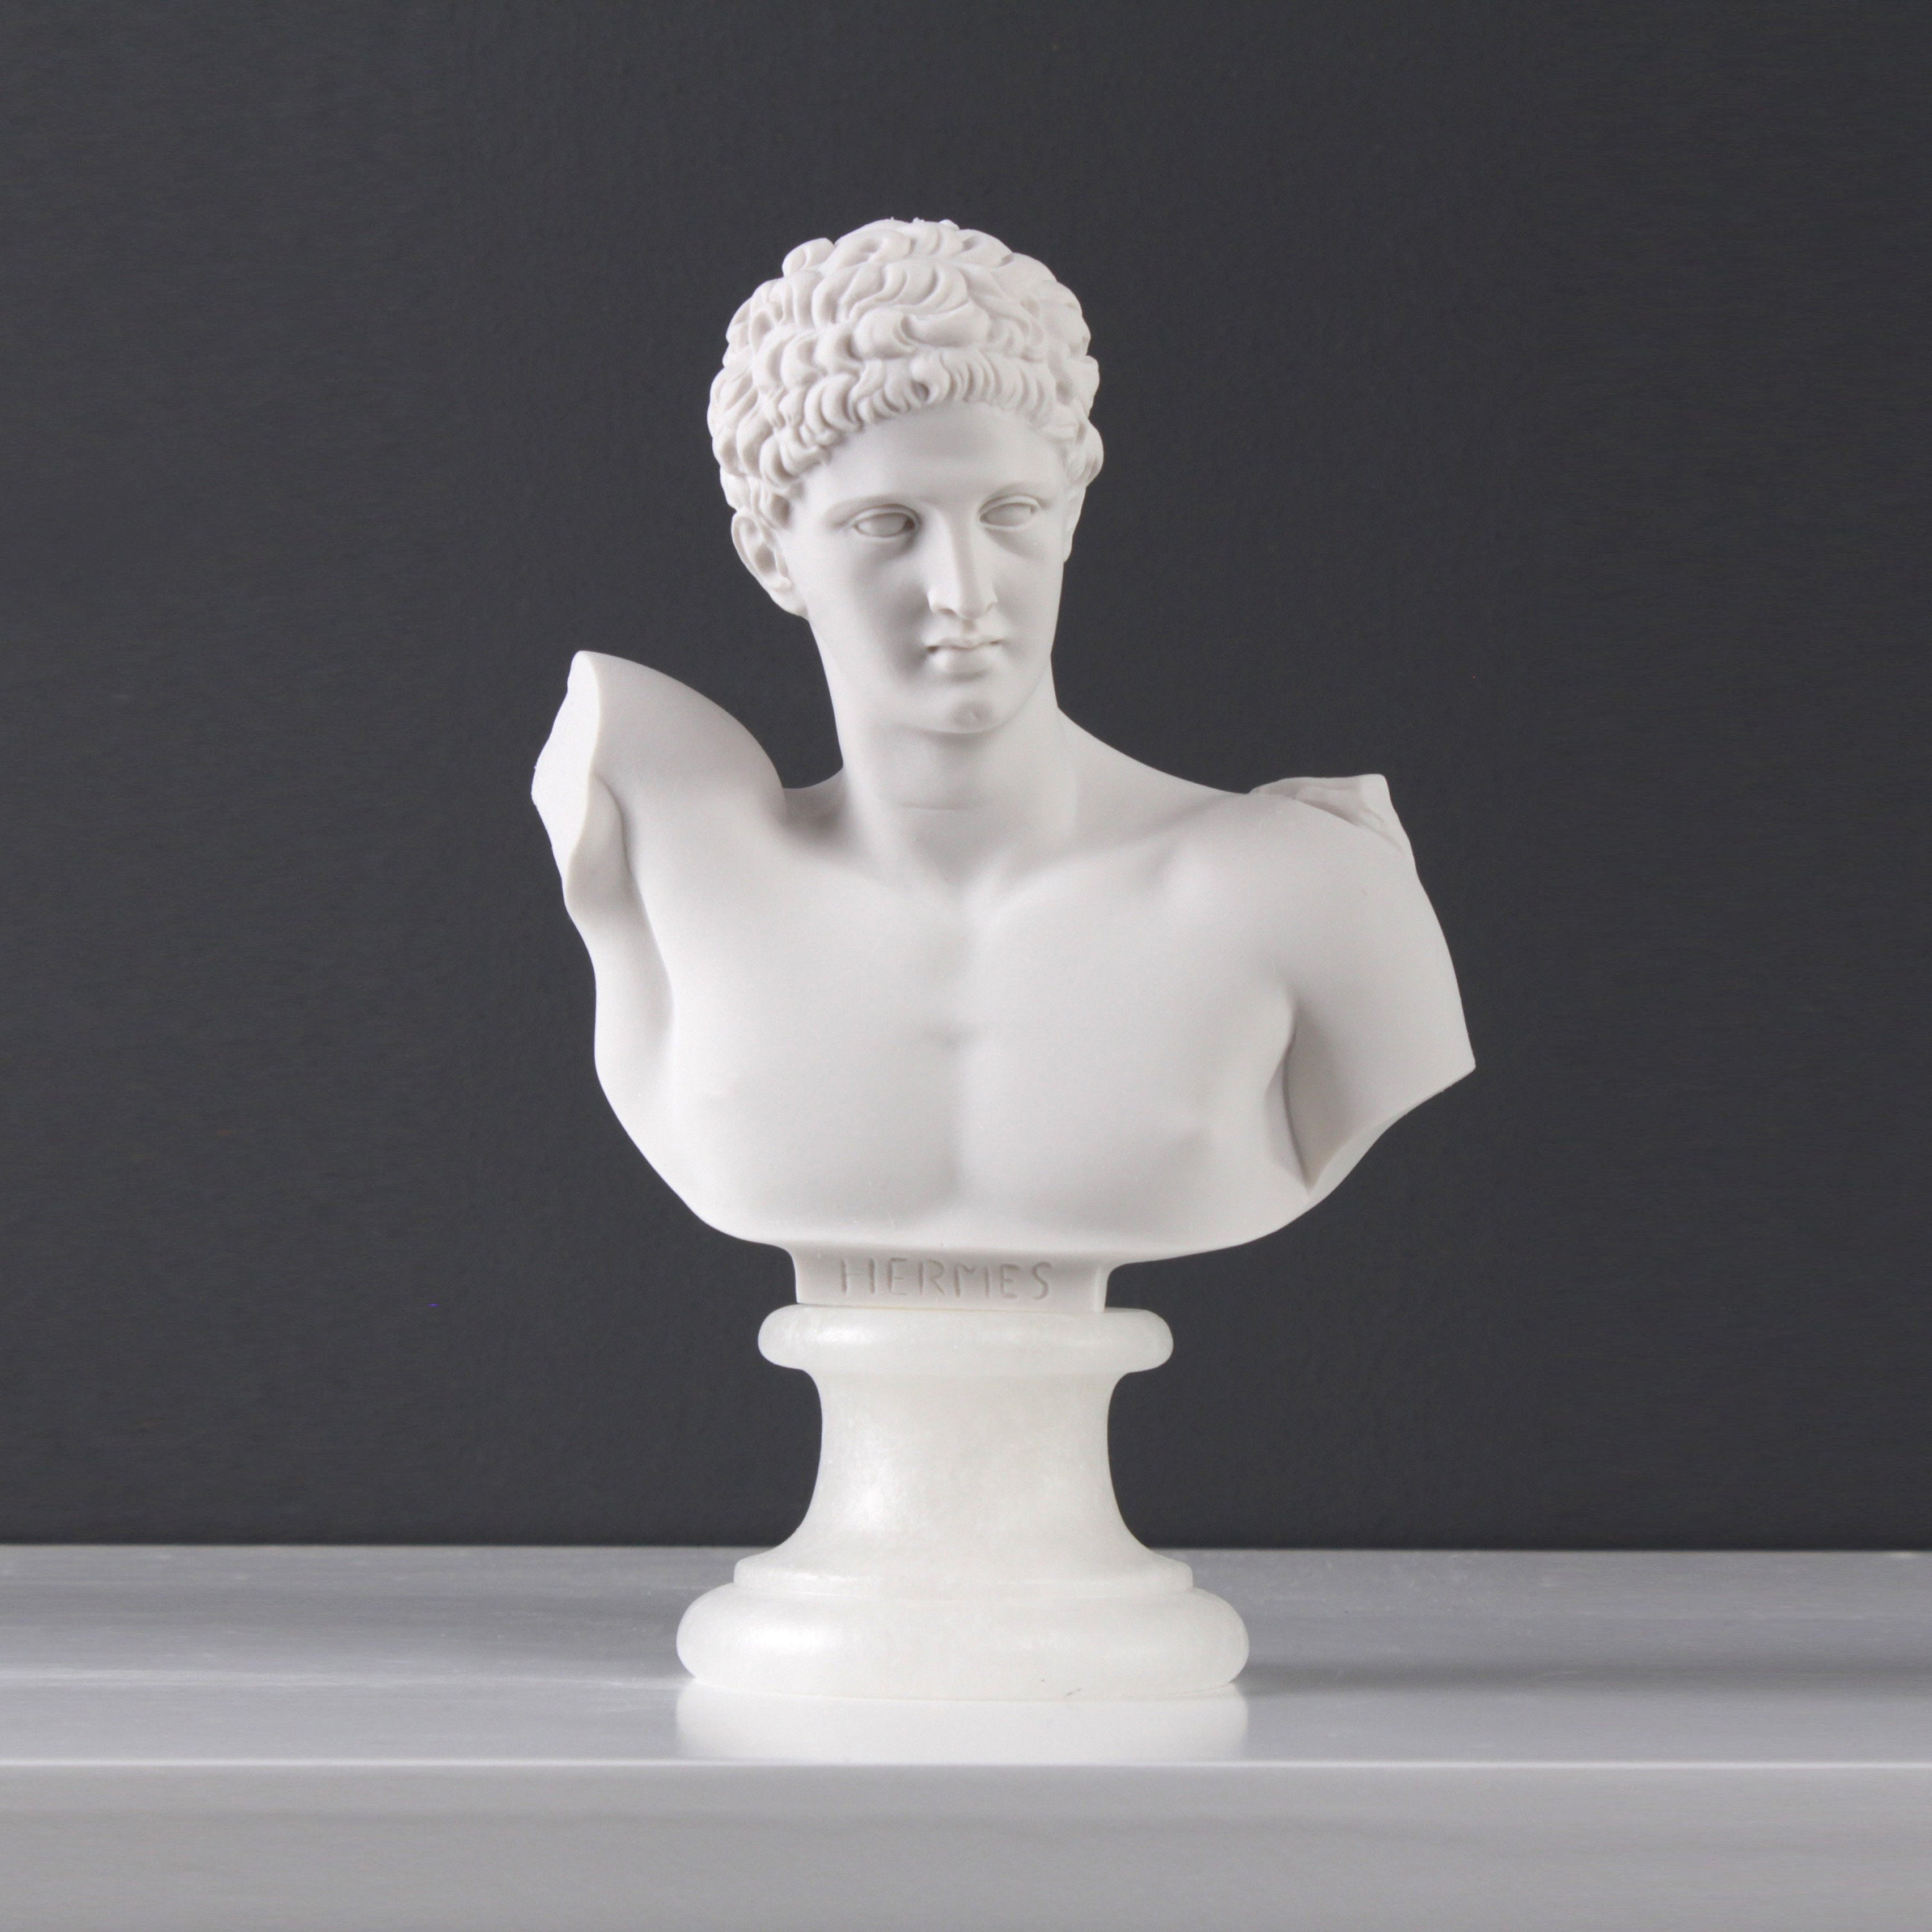 Hermes Bust Statue Mythology Sculpture Handmade in Europe   Etsy